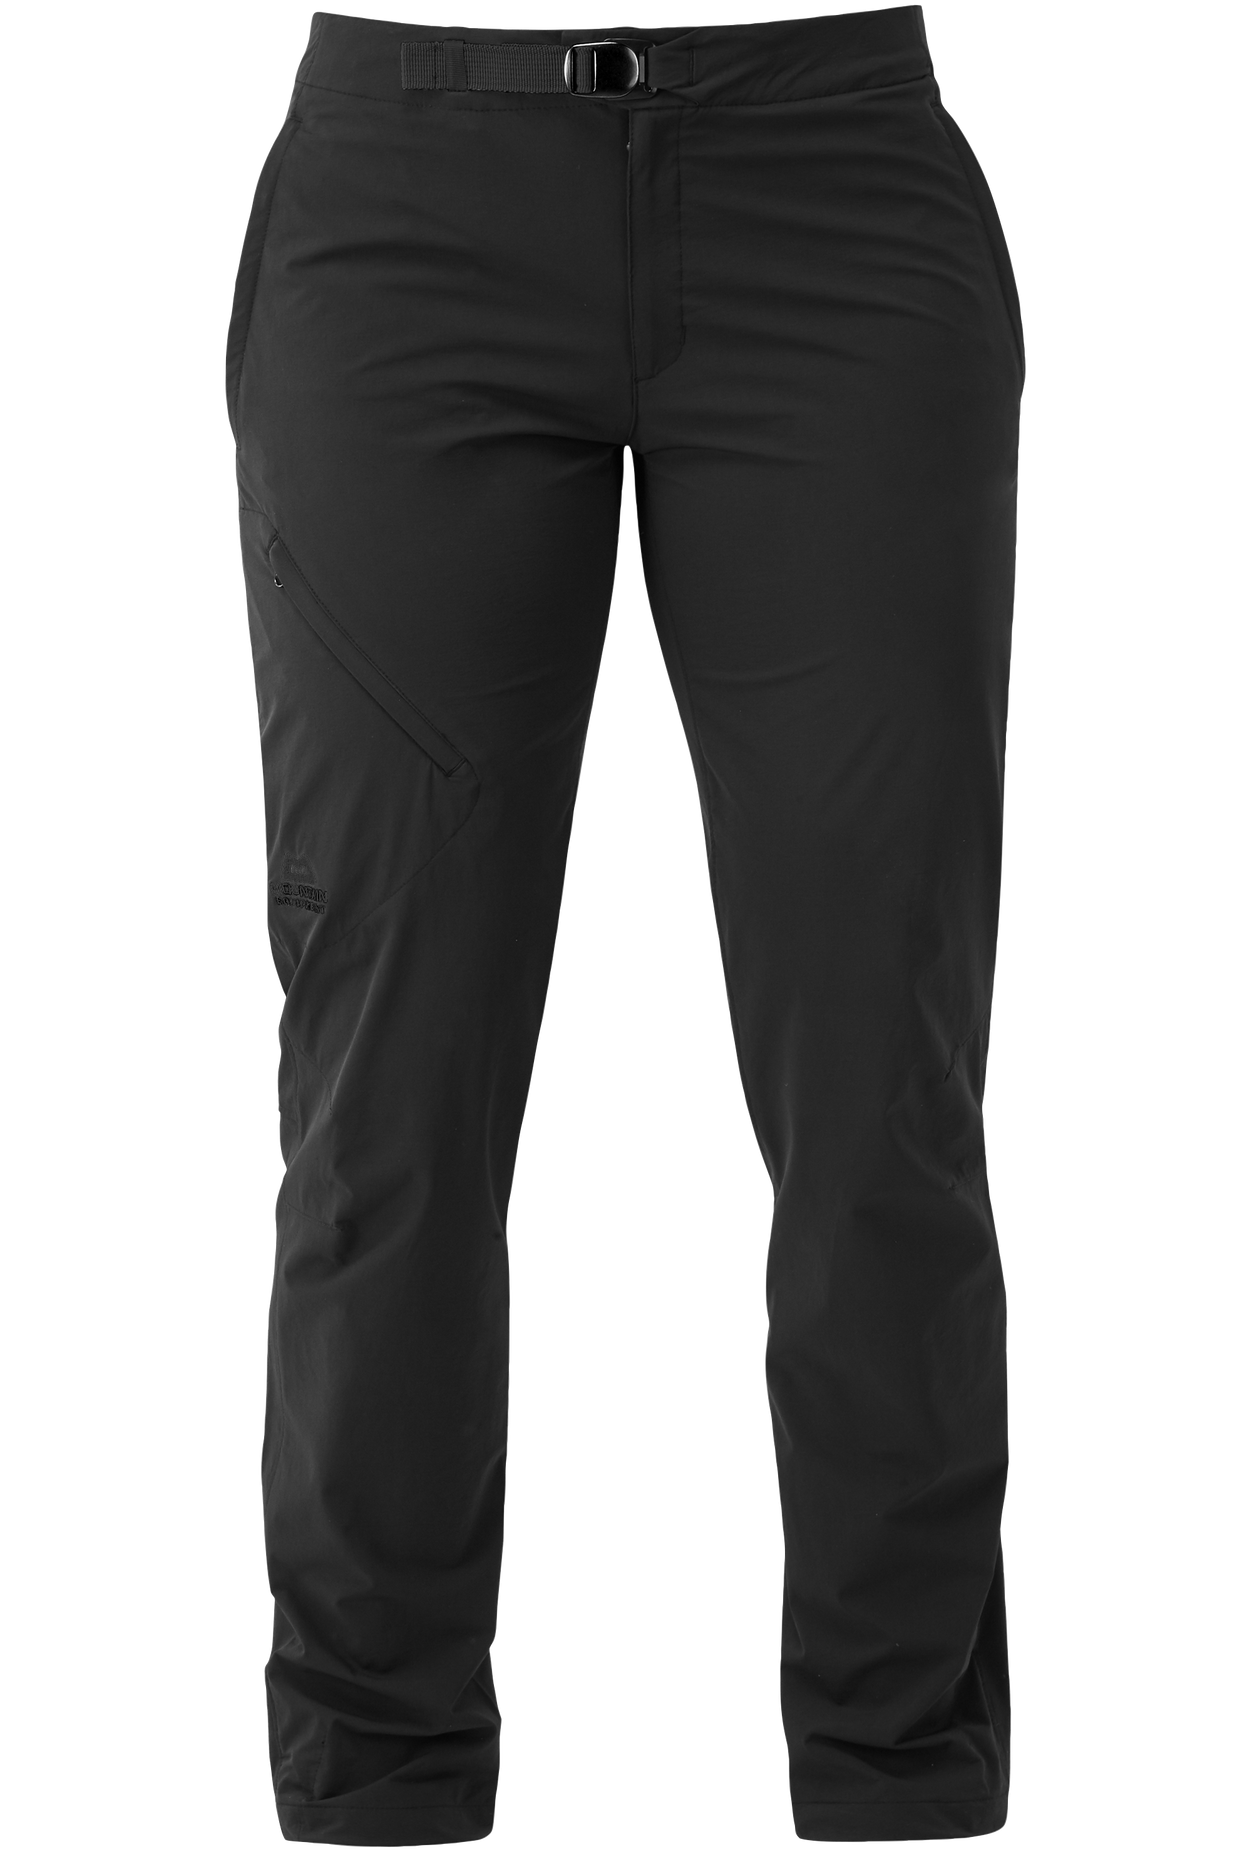 Mountain Equipment dámské softshellové kalhoty Comici Wmns Pant - zkrácené Barva: black/black, Velikost: 14/L